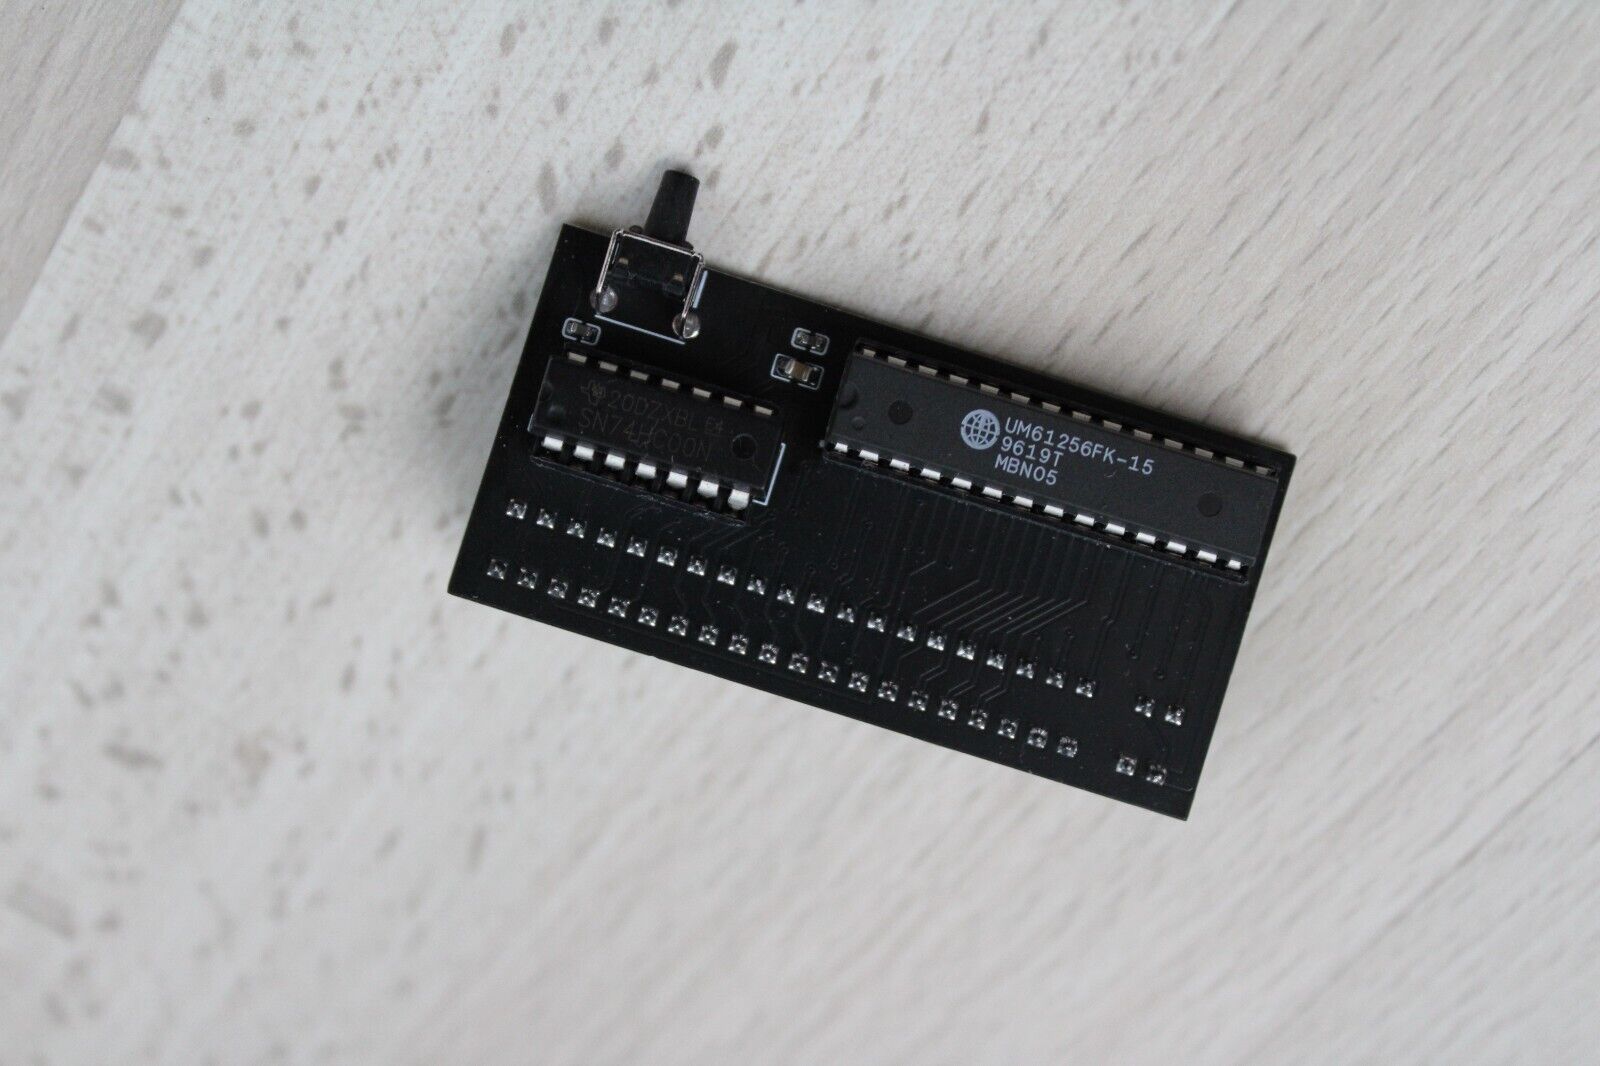 ZX81 16K RAM pack, Sinclair Timex 1000